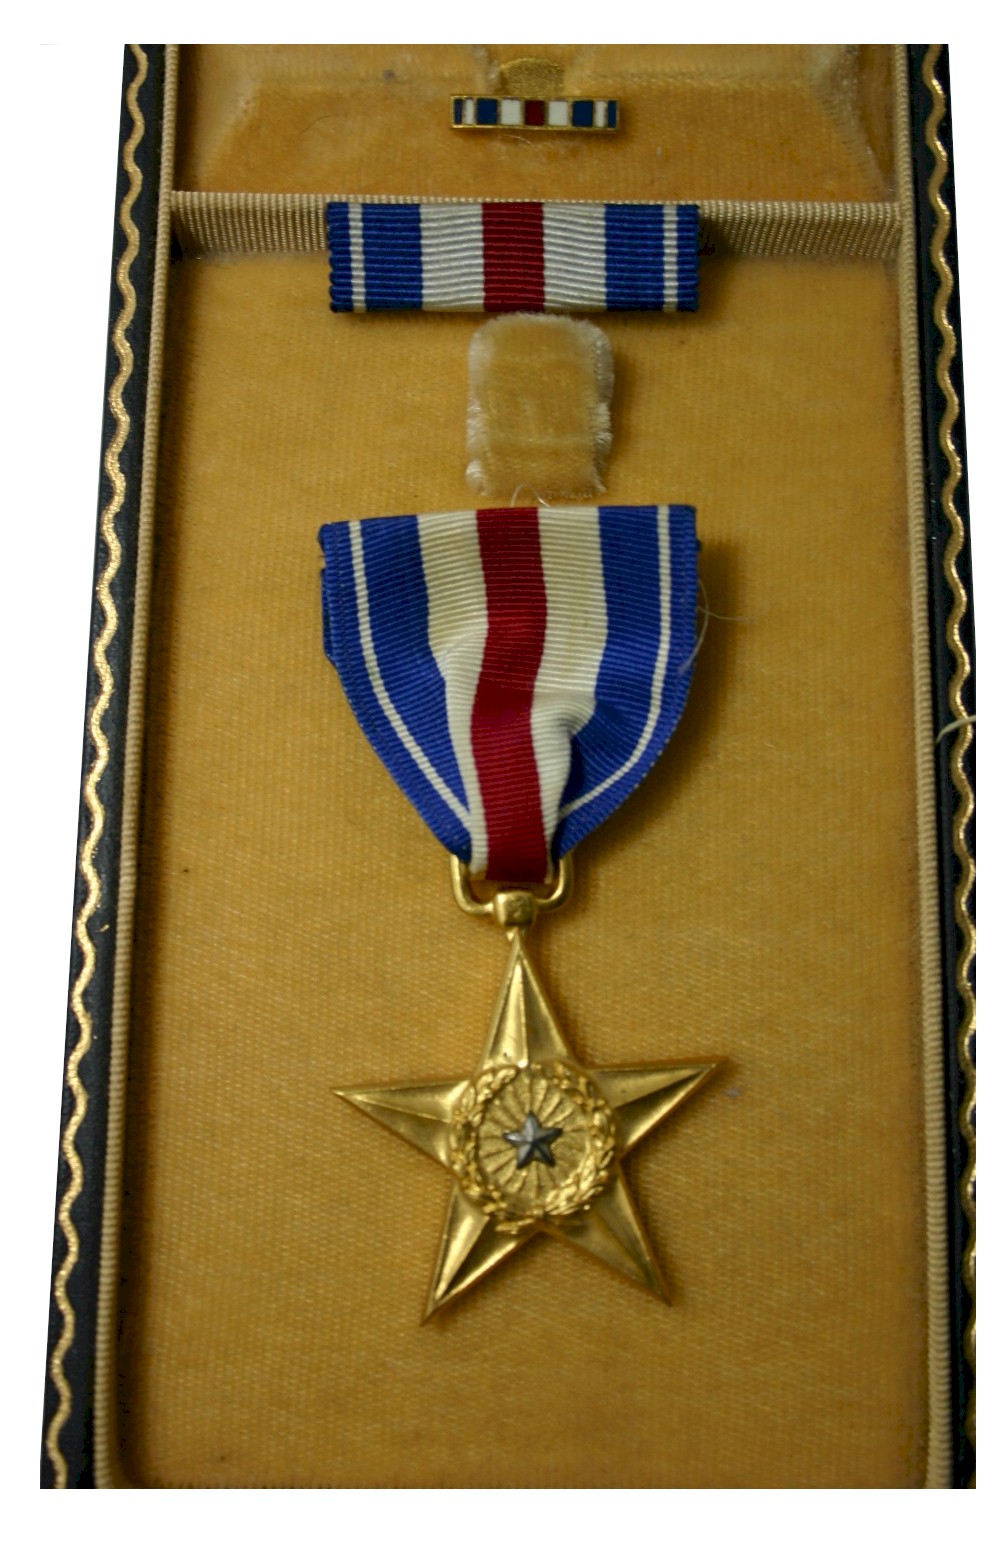 U.S. WW2 SILVER STAR MEDAL IN CASE